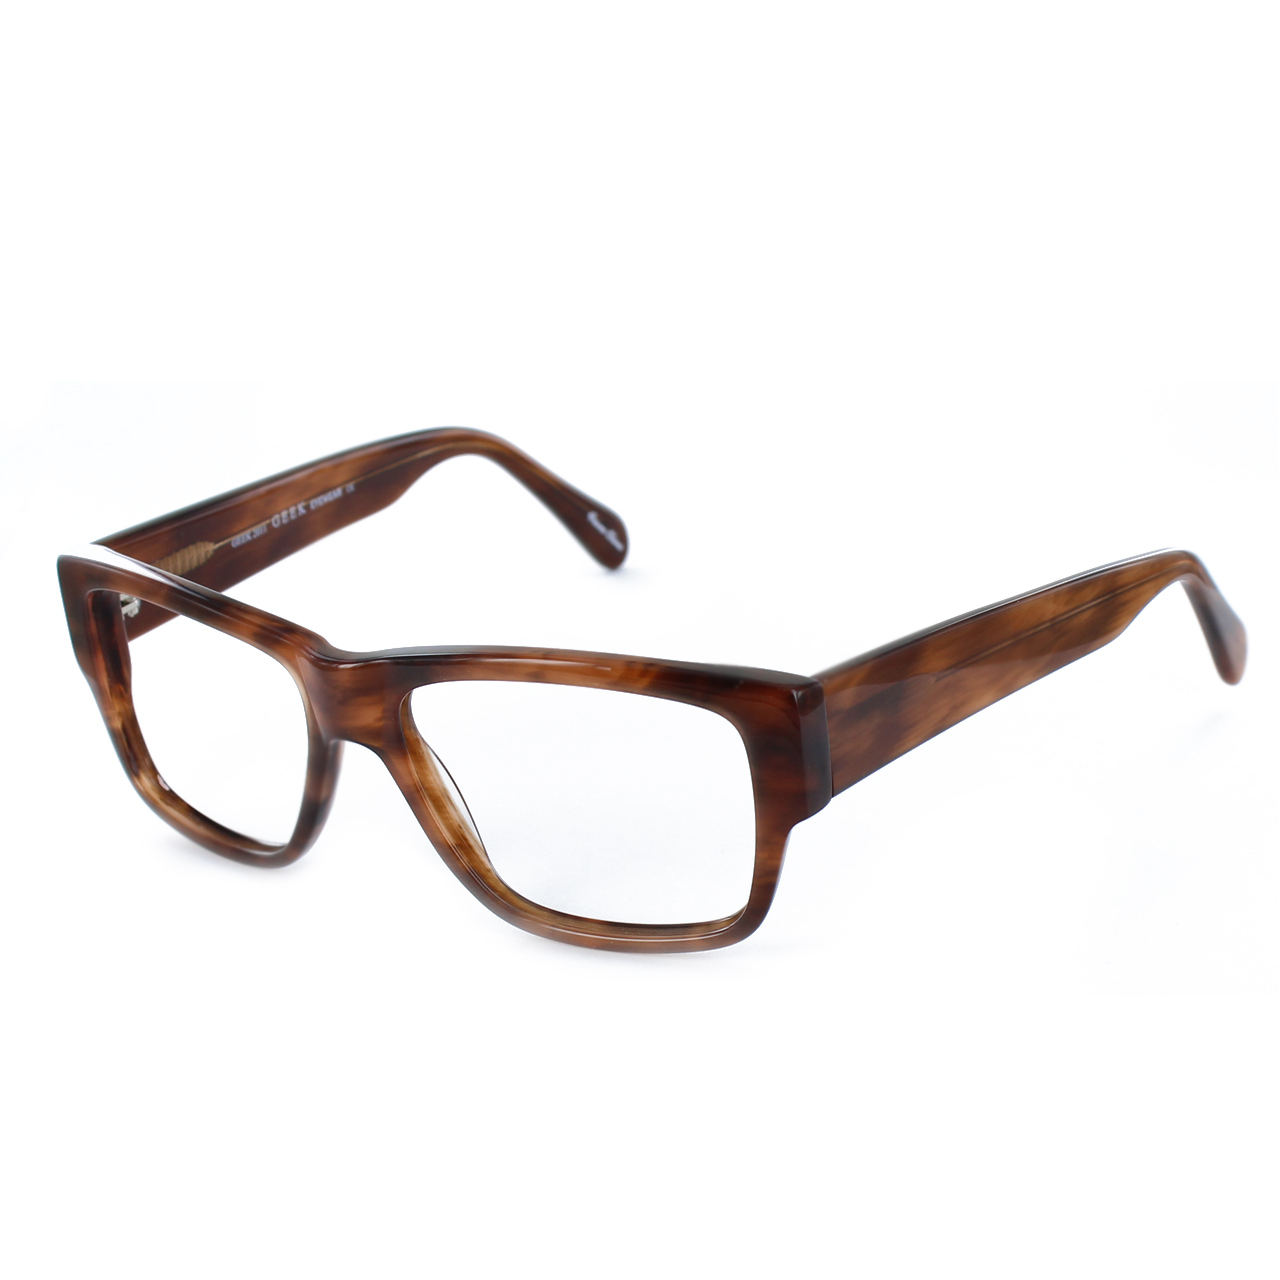 GEEK EYEWEAR® Rx Eyeglasses | Ready-To-Wear Specs for Music, Film ...